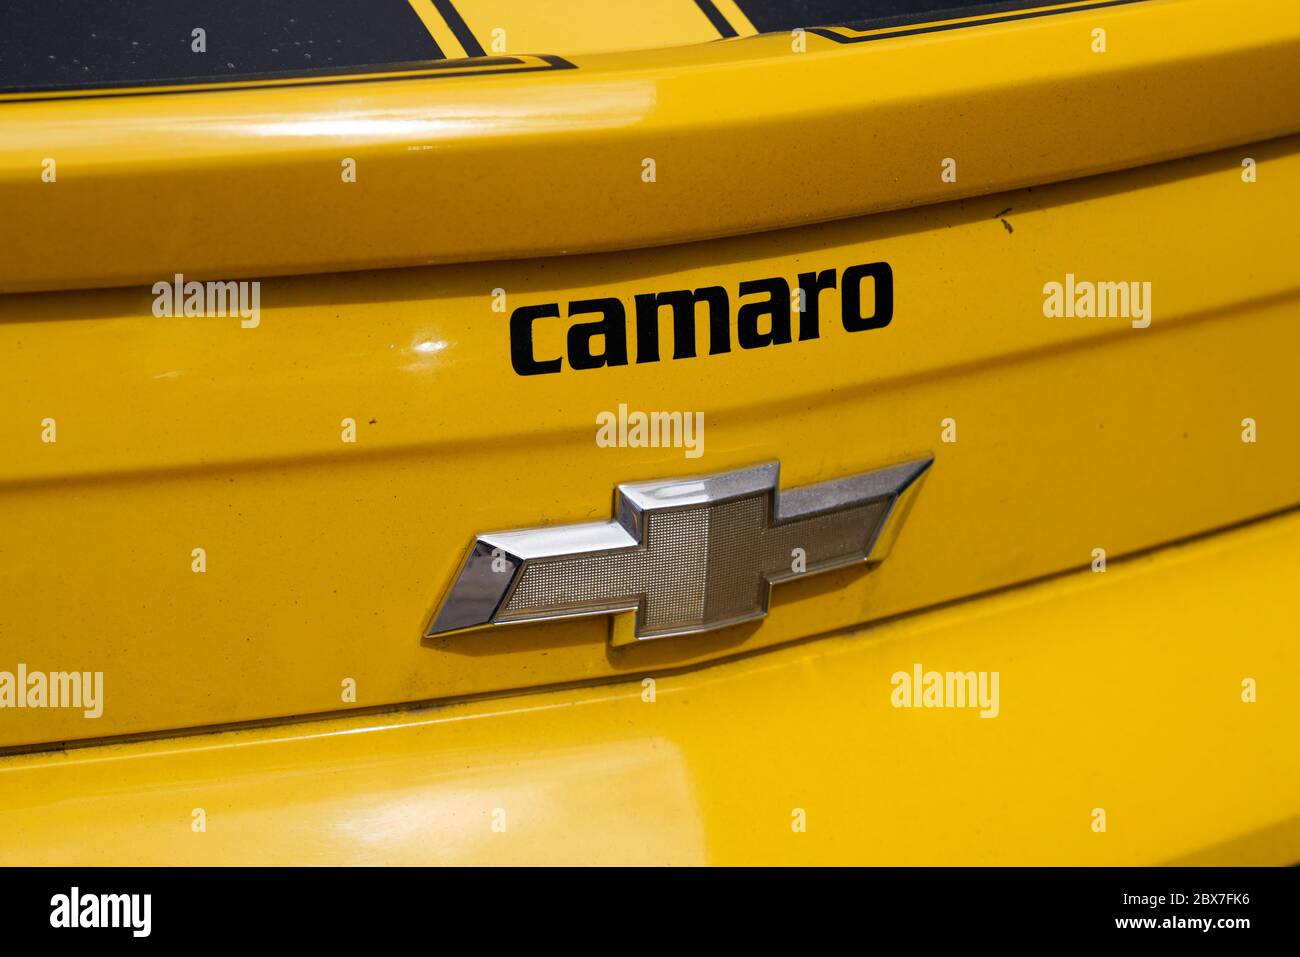 Bordeaux , Aquitaine / France - 06 01 2020 : Chevrolet camaro logo sign on  rear yellow car Stock Photo - Alamy